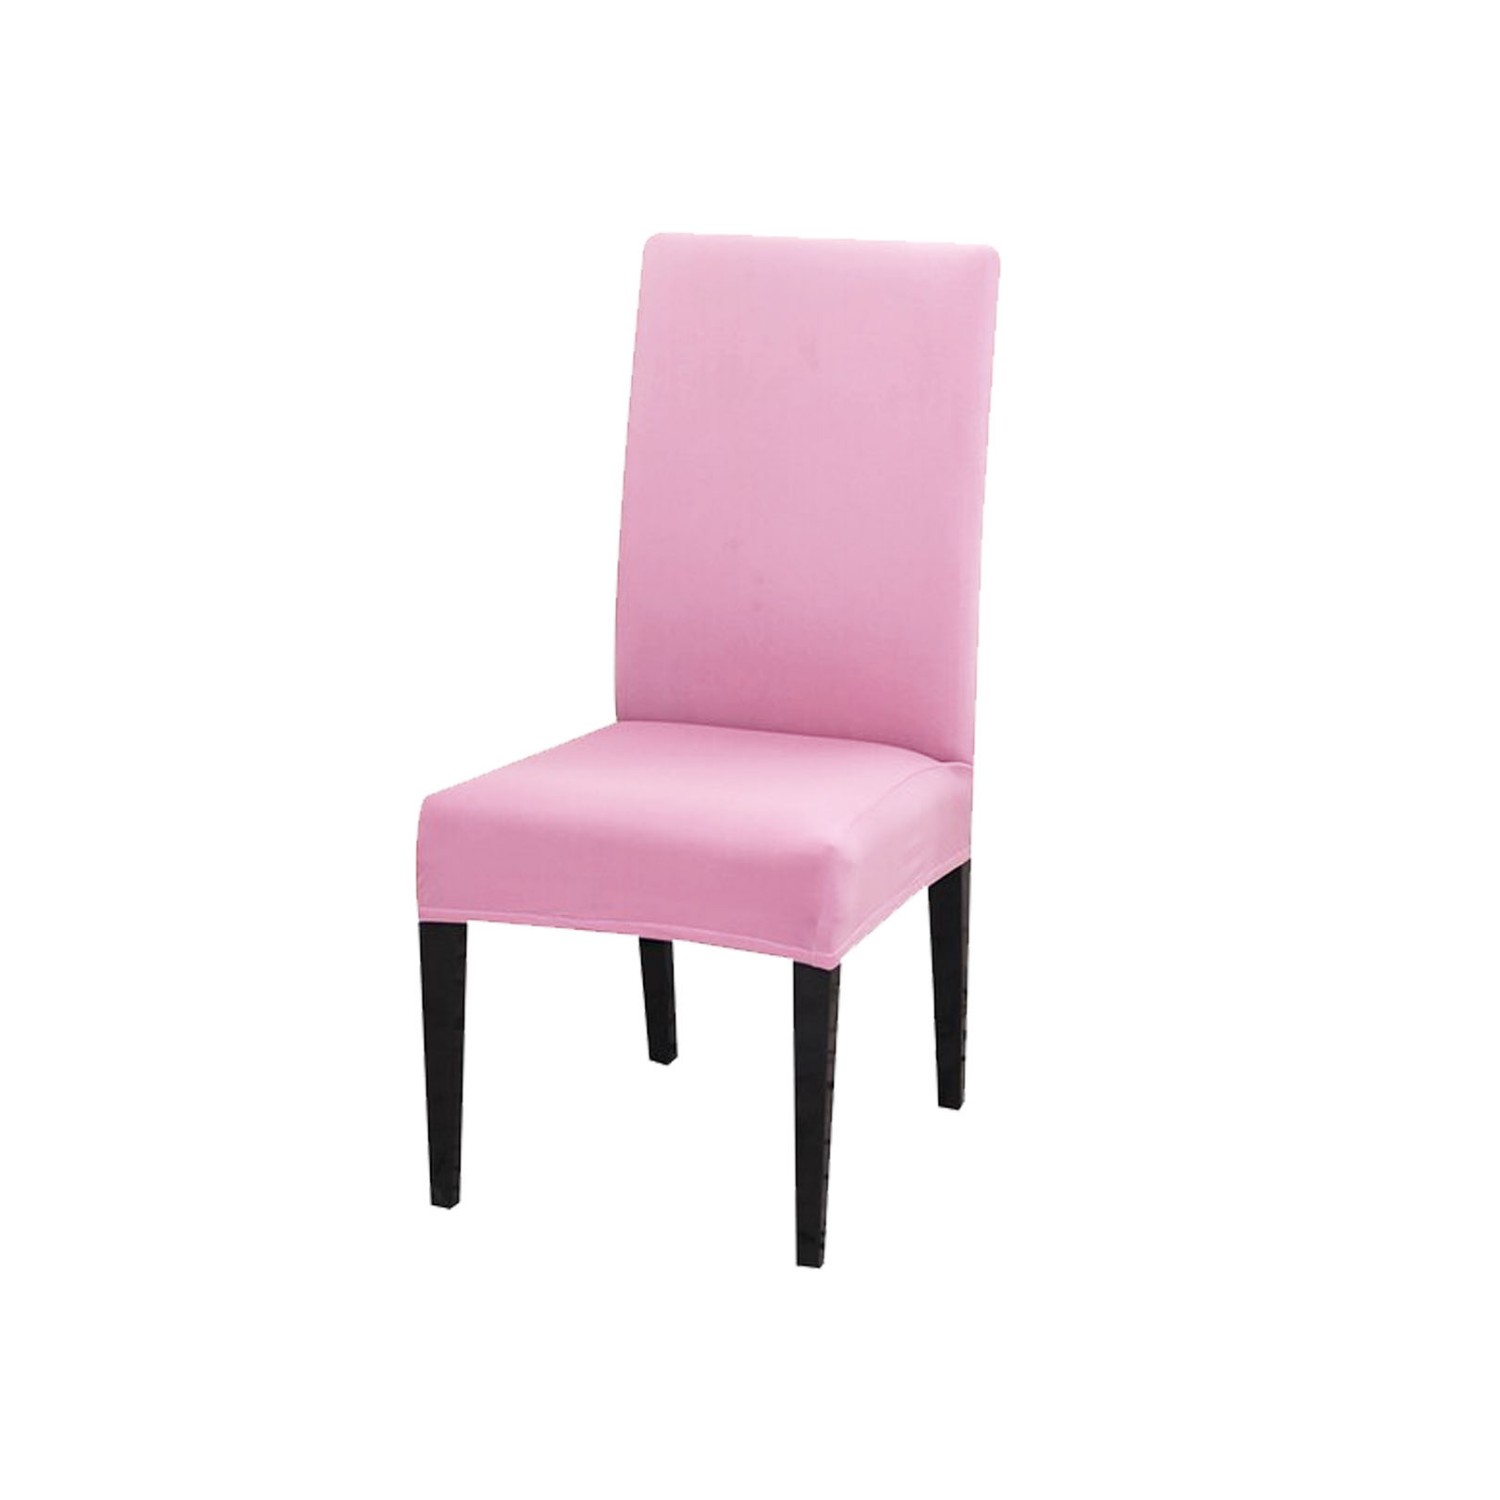 Чехол на стул LuxAlto Коллекция Jersey розовый - фото 1